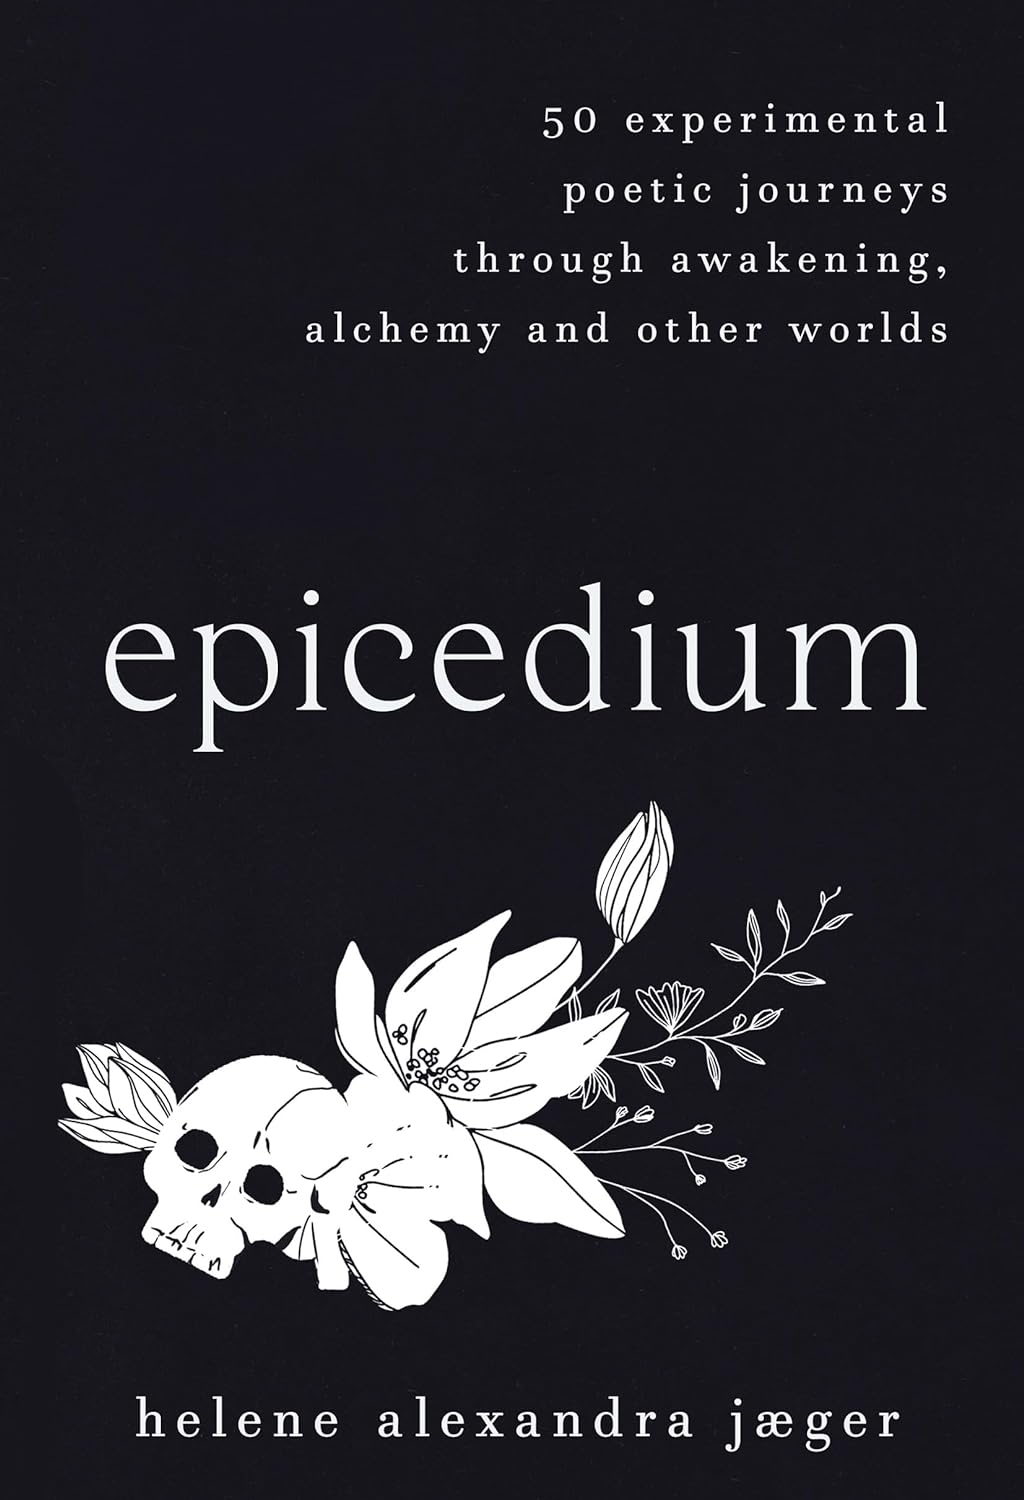 Epicedium – 50 experimental poetic journeys through awakening, alchemy and other worlds by Helene Alexandra Jæger